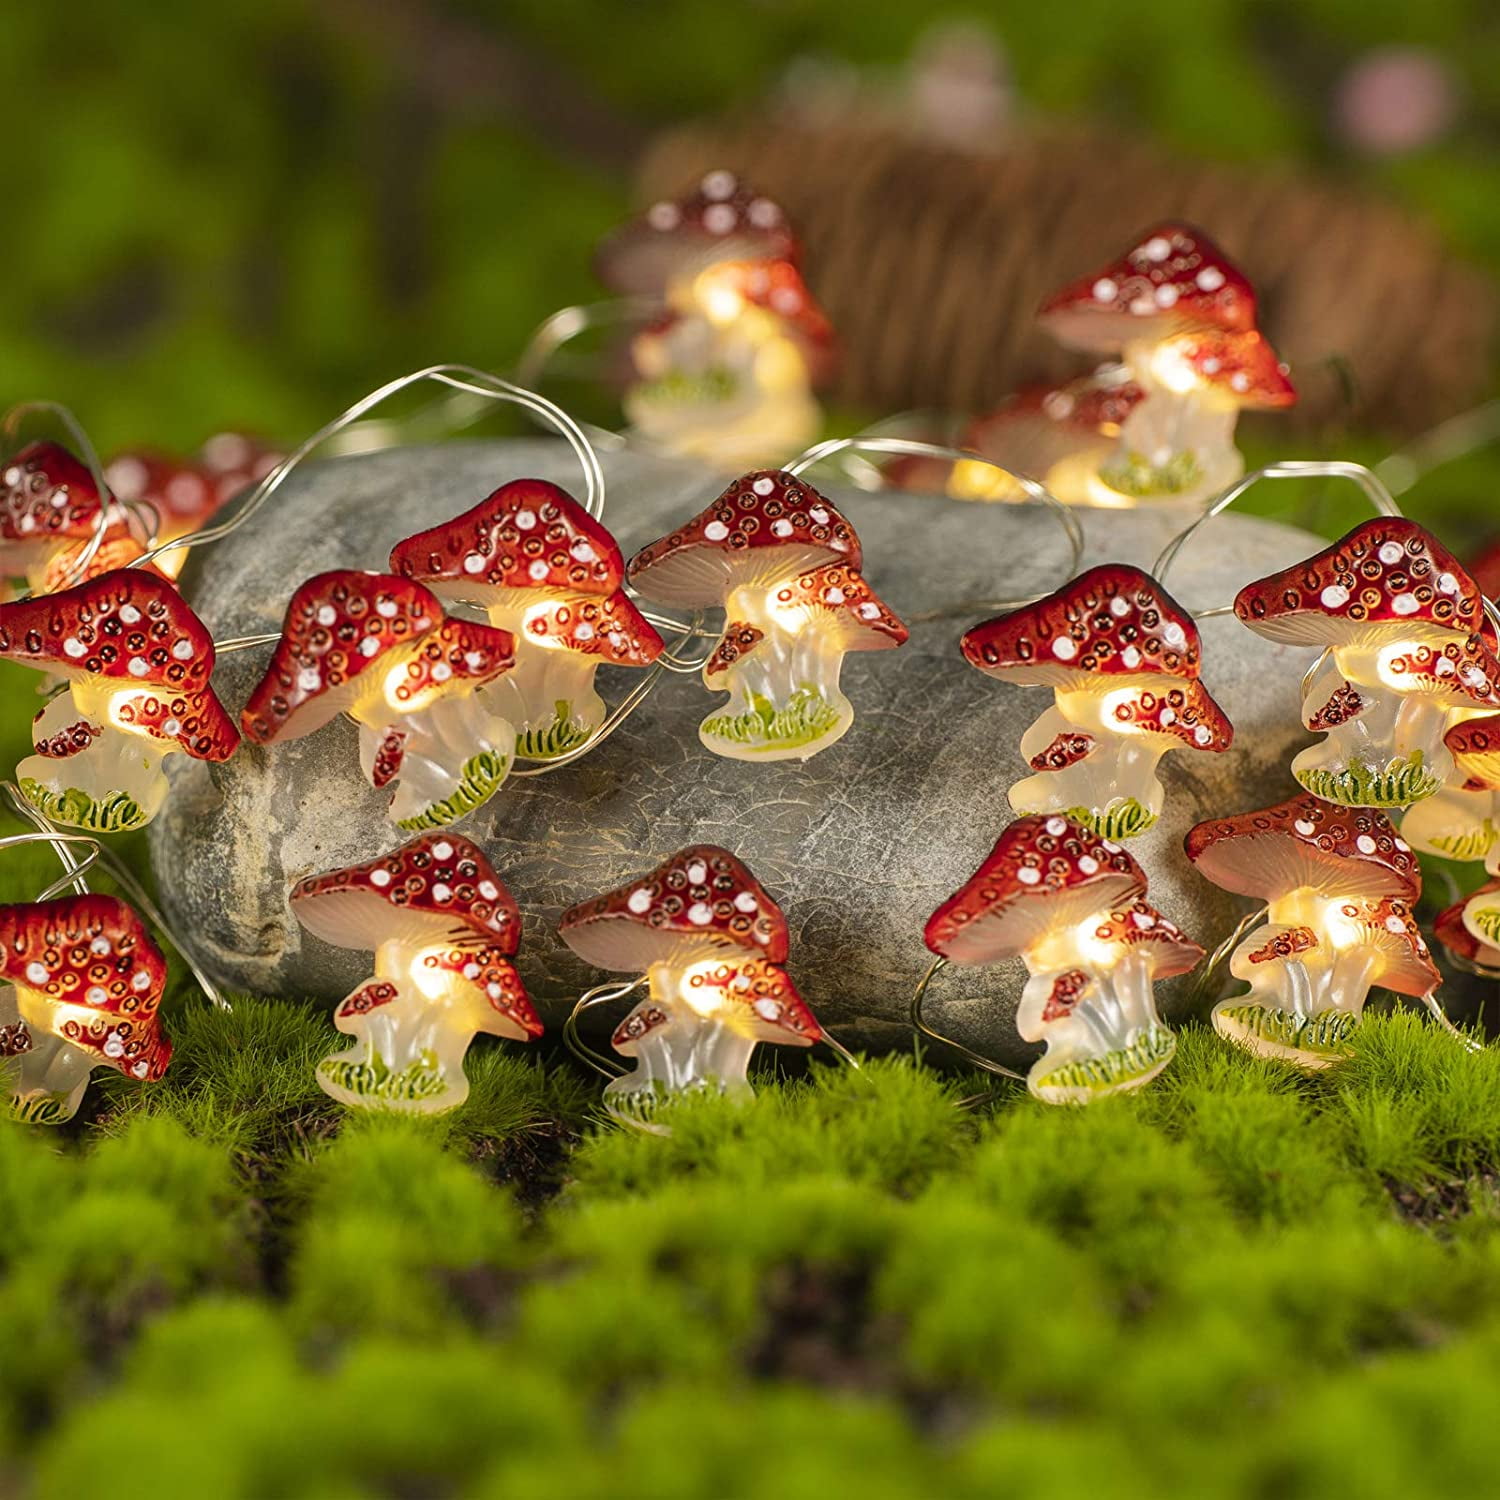 USB Led Mushroom Light Mini Led Light For Home Party Parties Change Color Music 